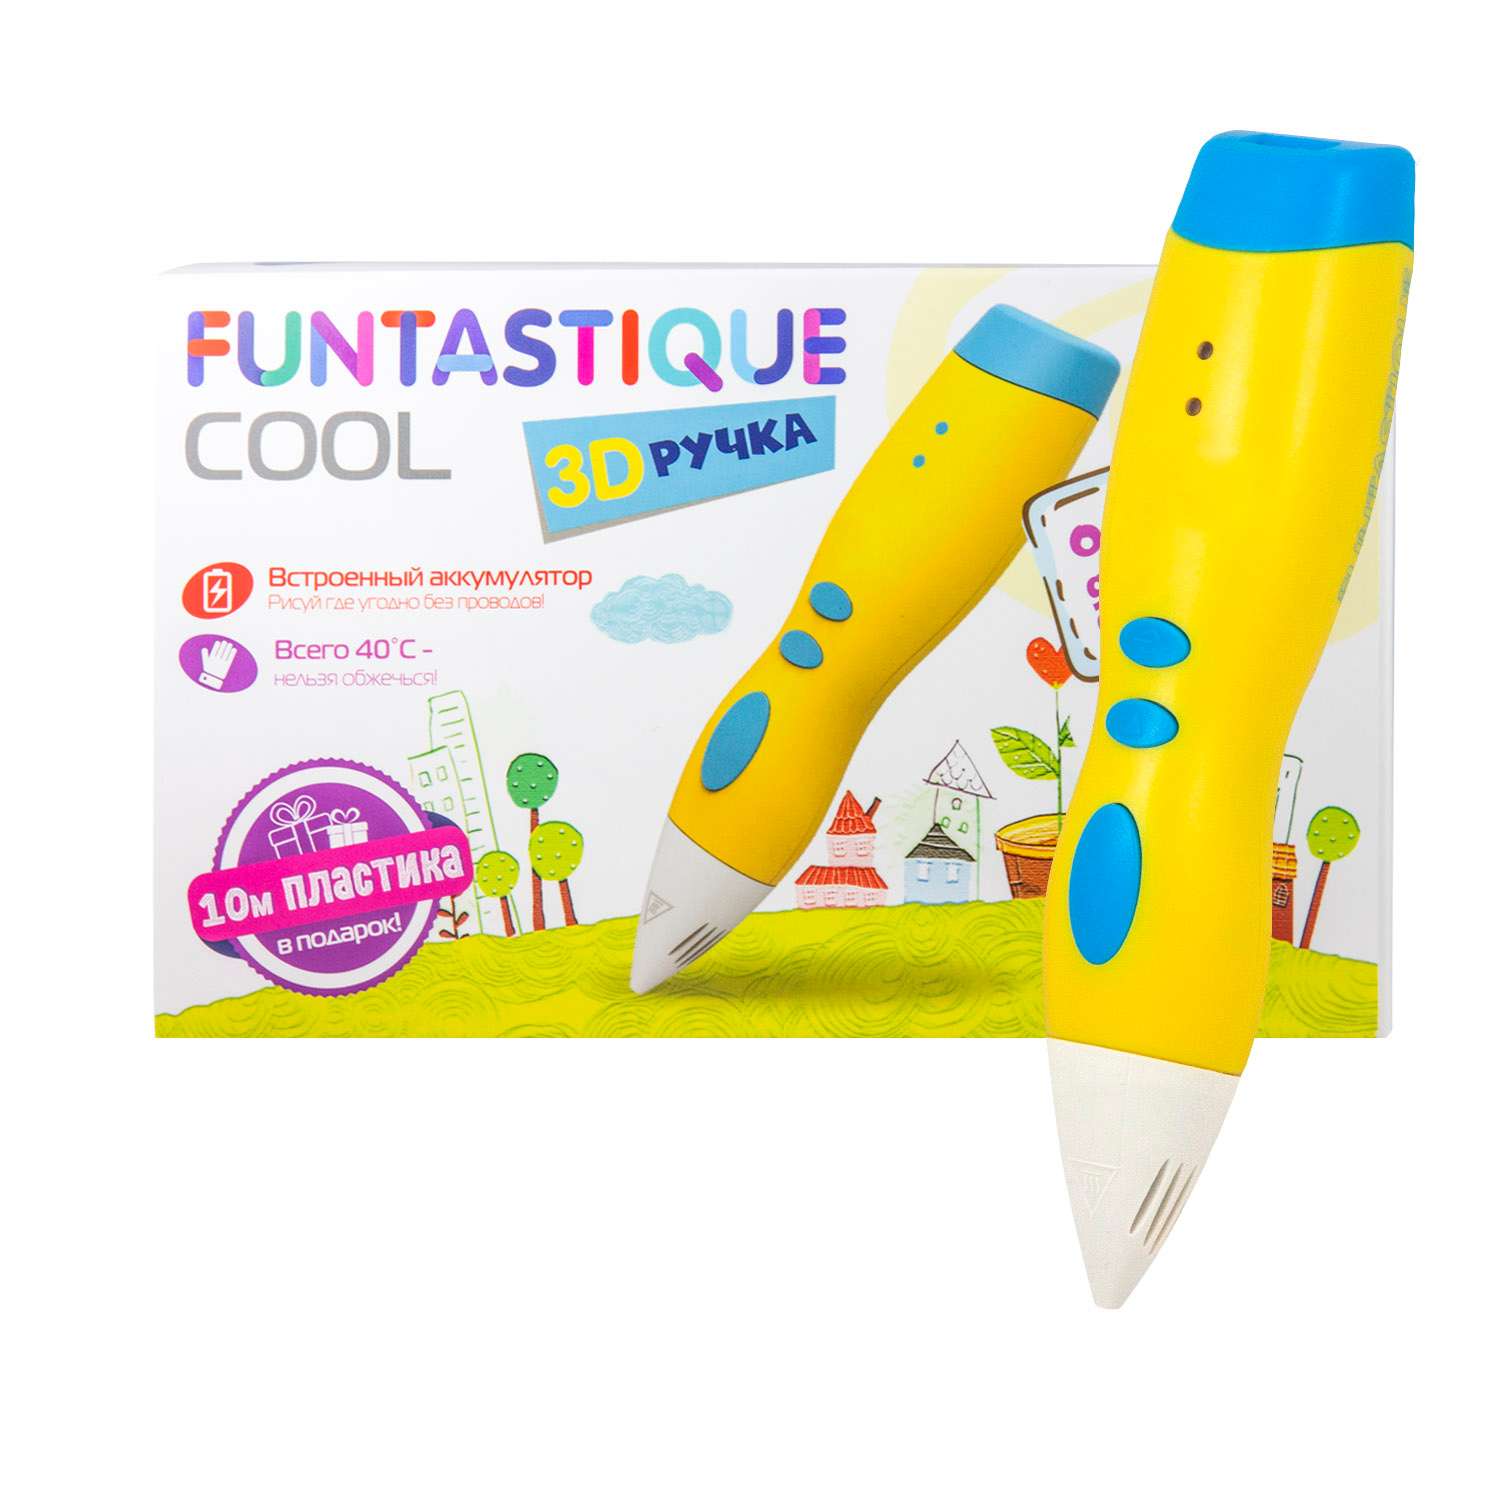 3D ручка FUNTASTIQUE cool желтый - фото 1